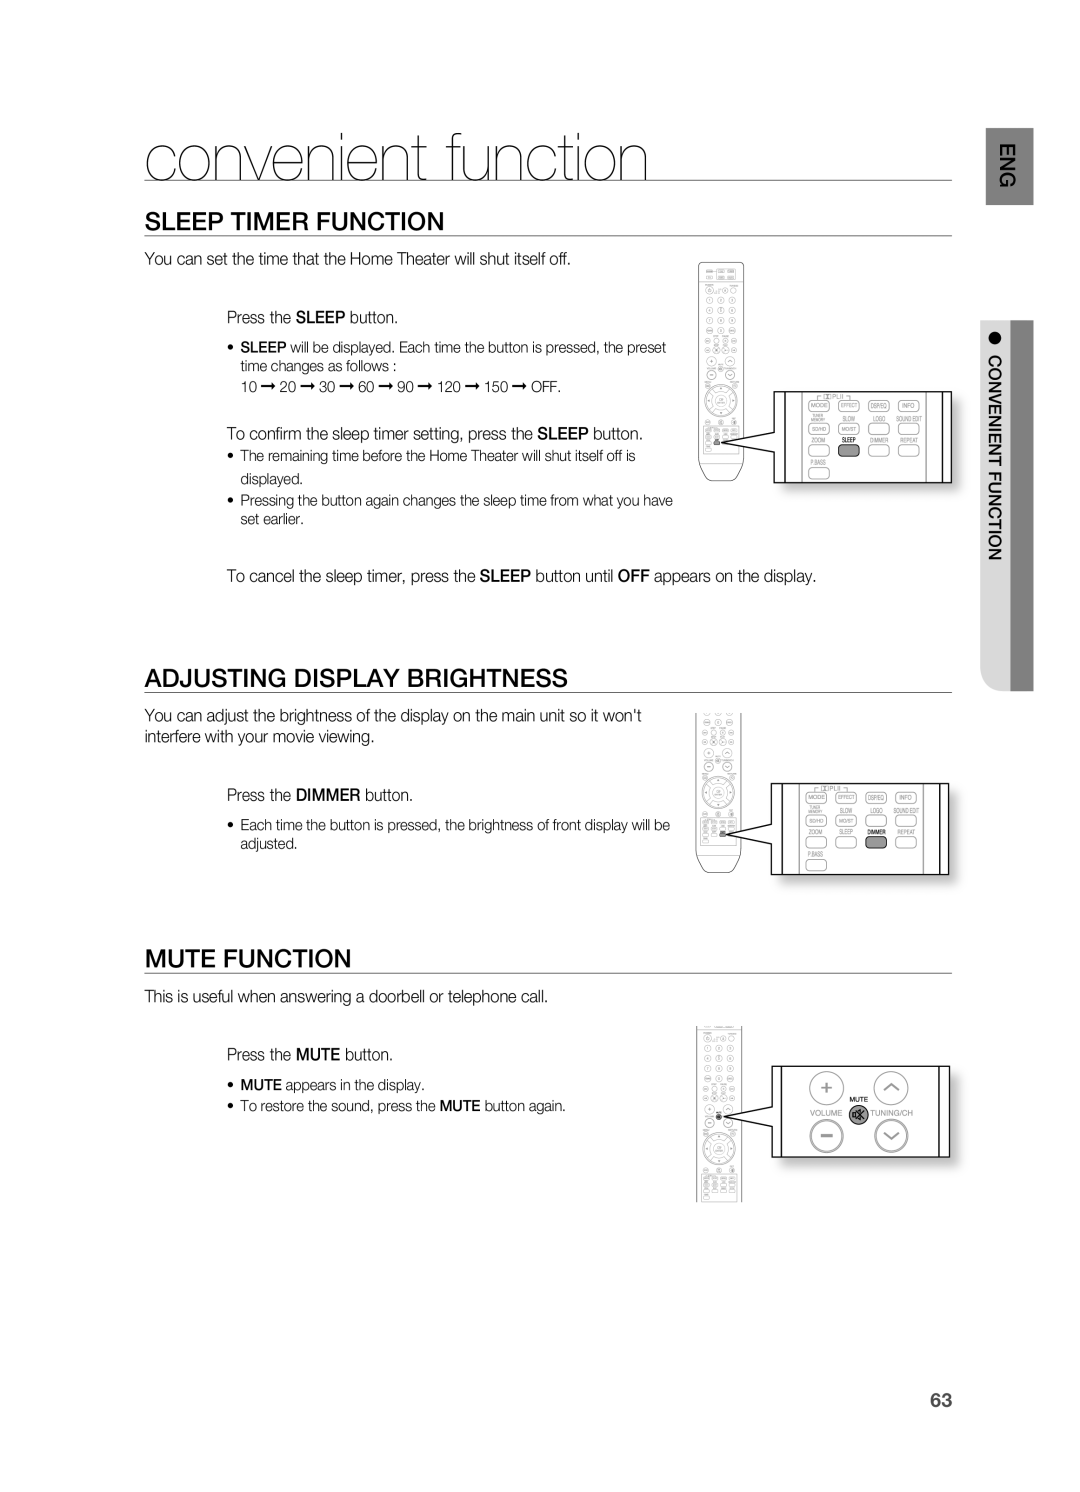 Samsung AH68-02055S manual convenient function, SLEEP timEr fUnCtiOn, aDJUStinG DiSPLay BriGHtnESS, mUtE fUnCtiOn 